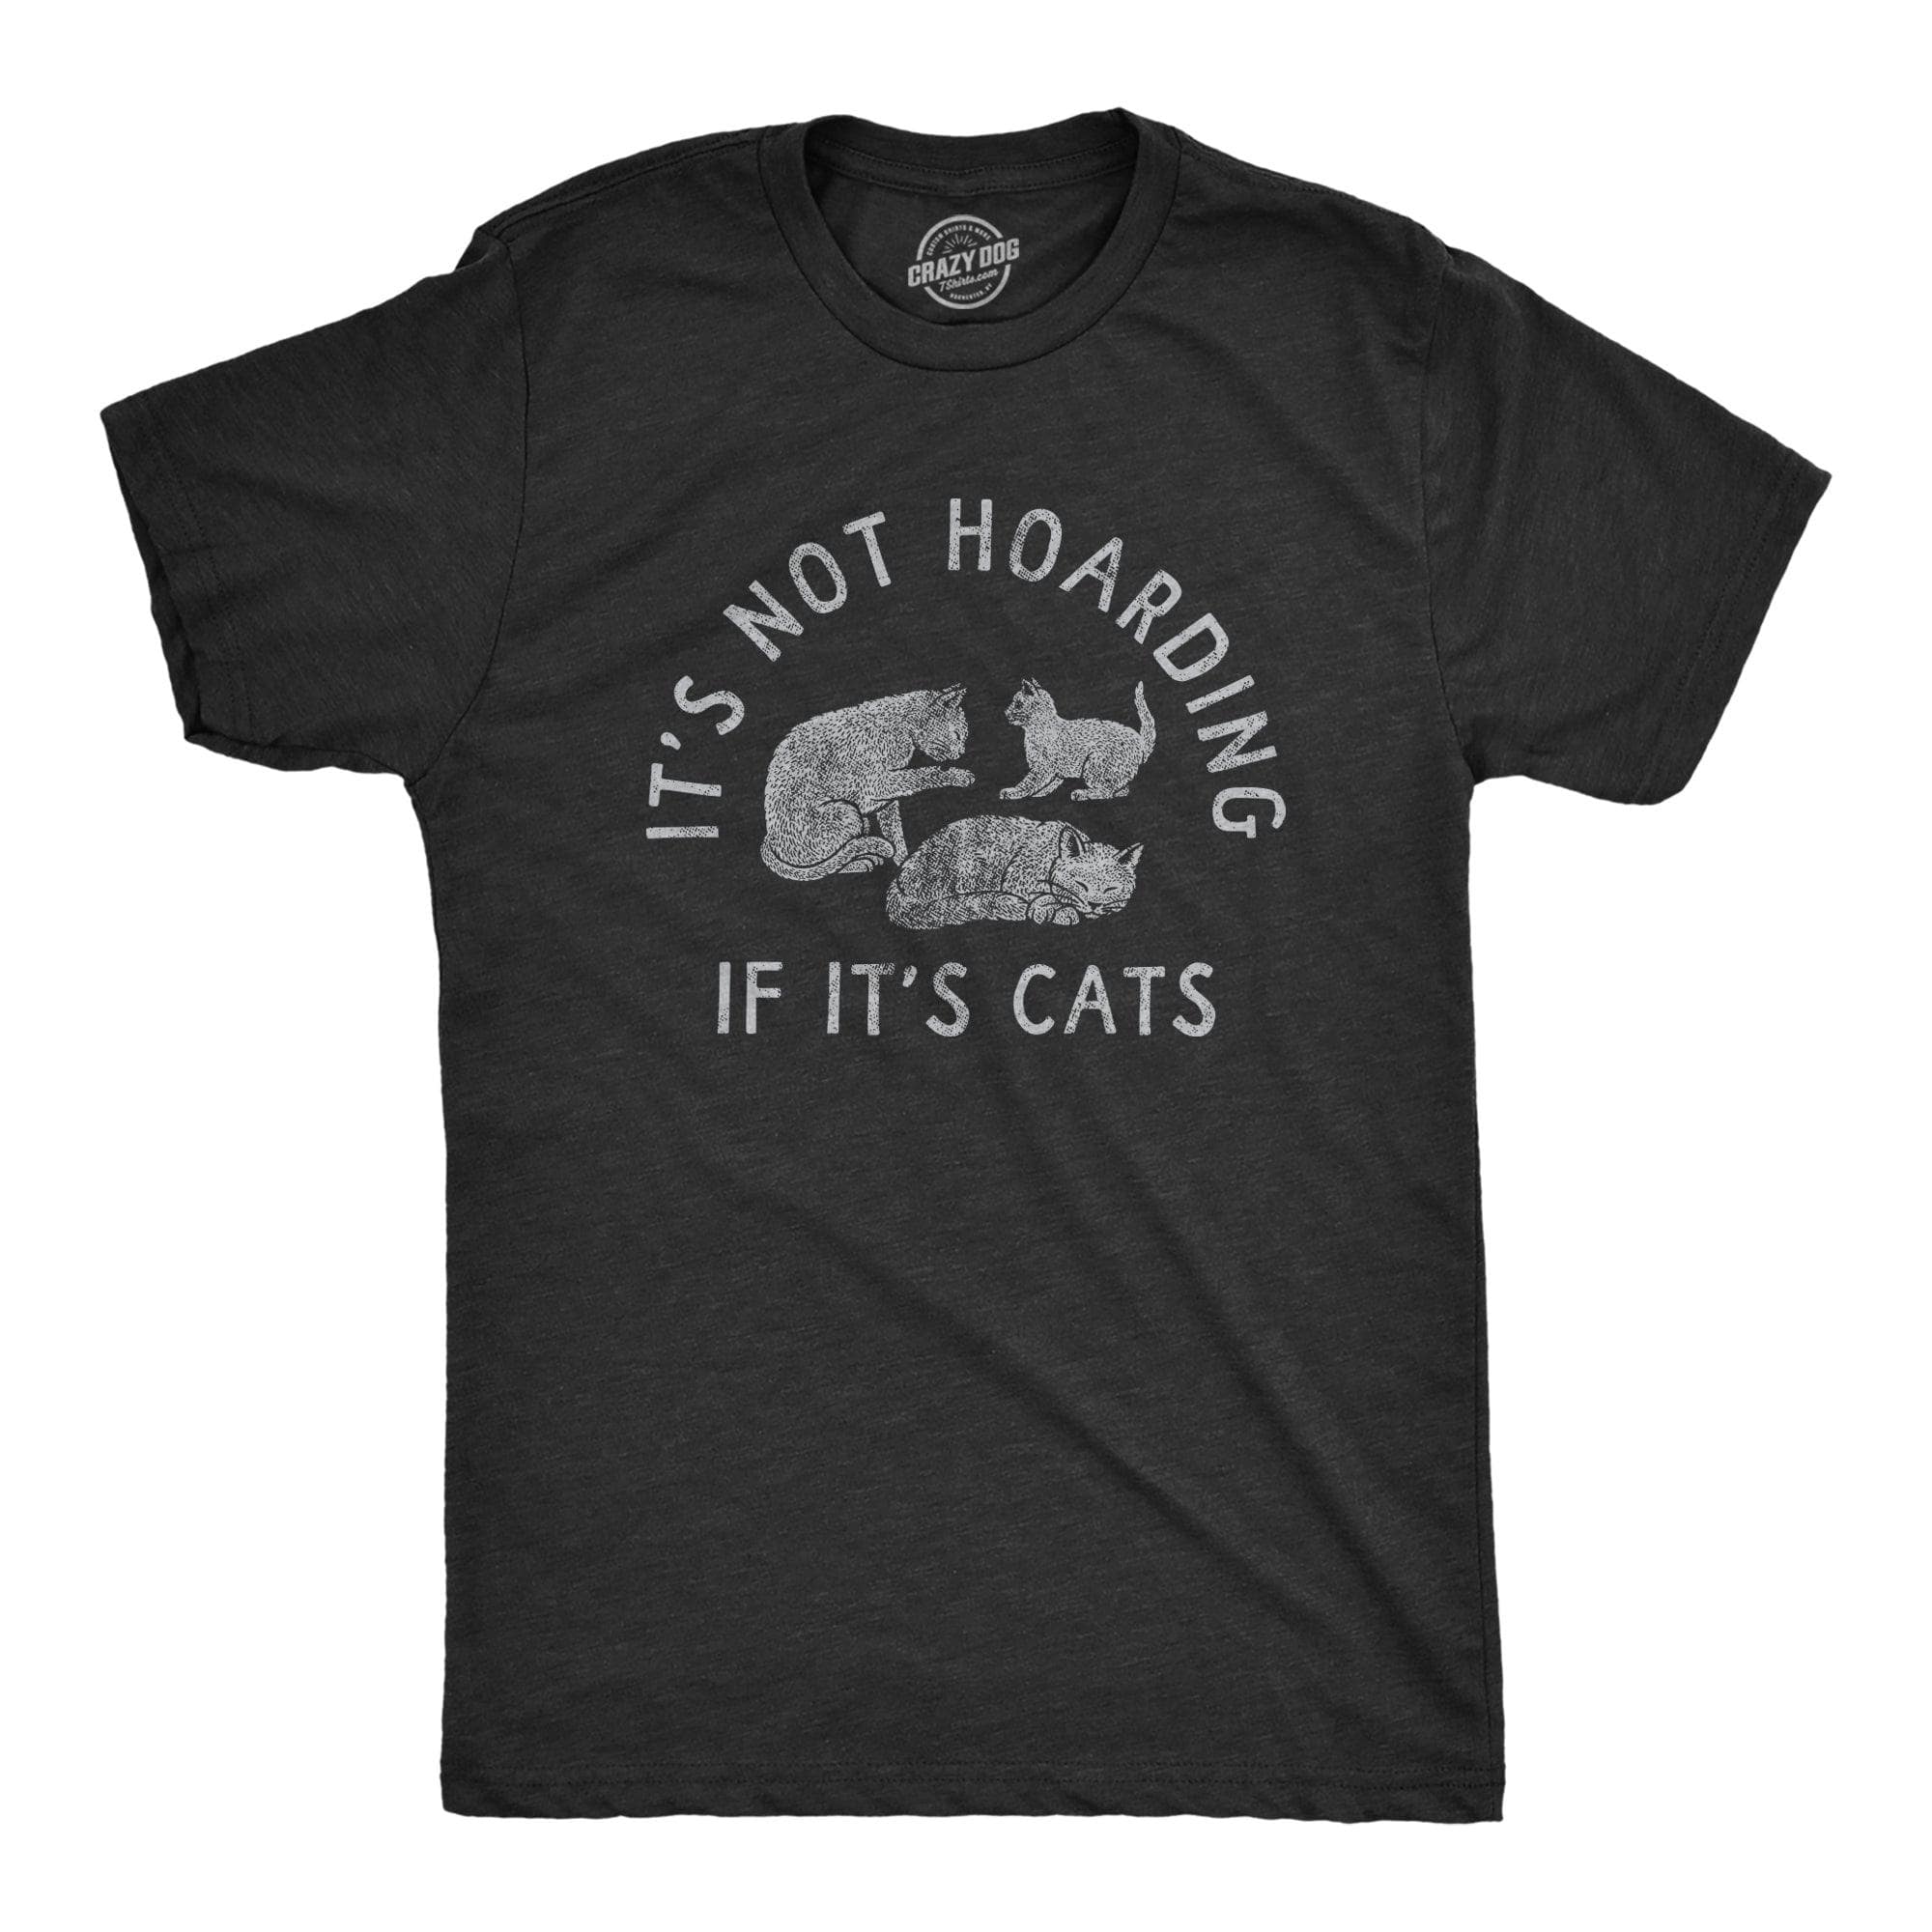 Its Not Hoarding If Its Cats Men's Tshirt  -  Crazy Dog T-Shirts